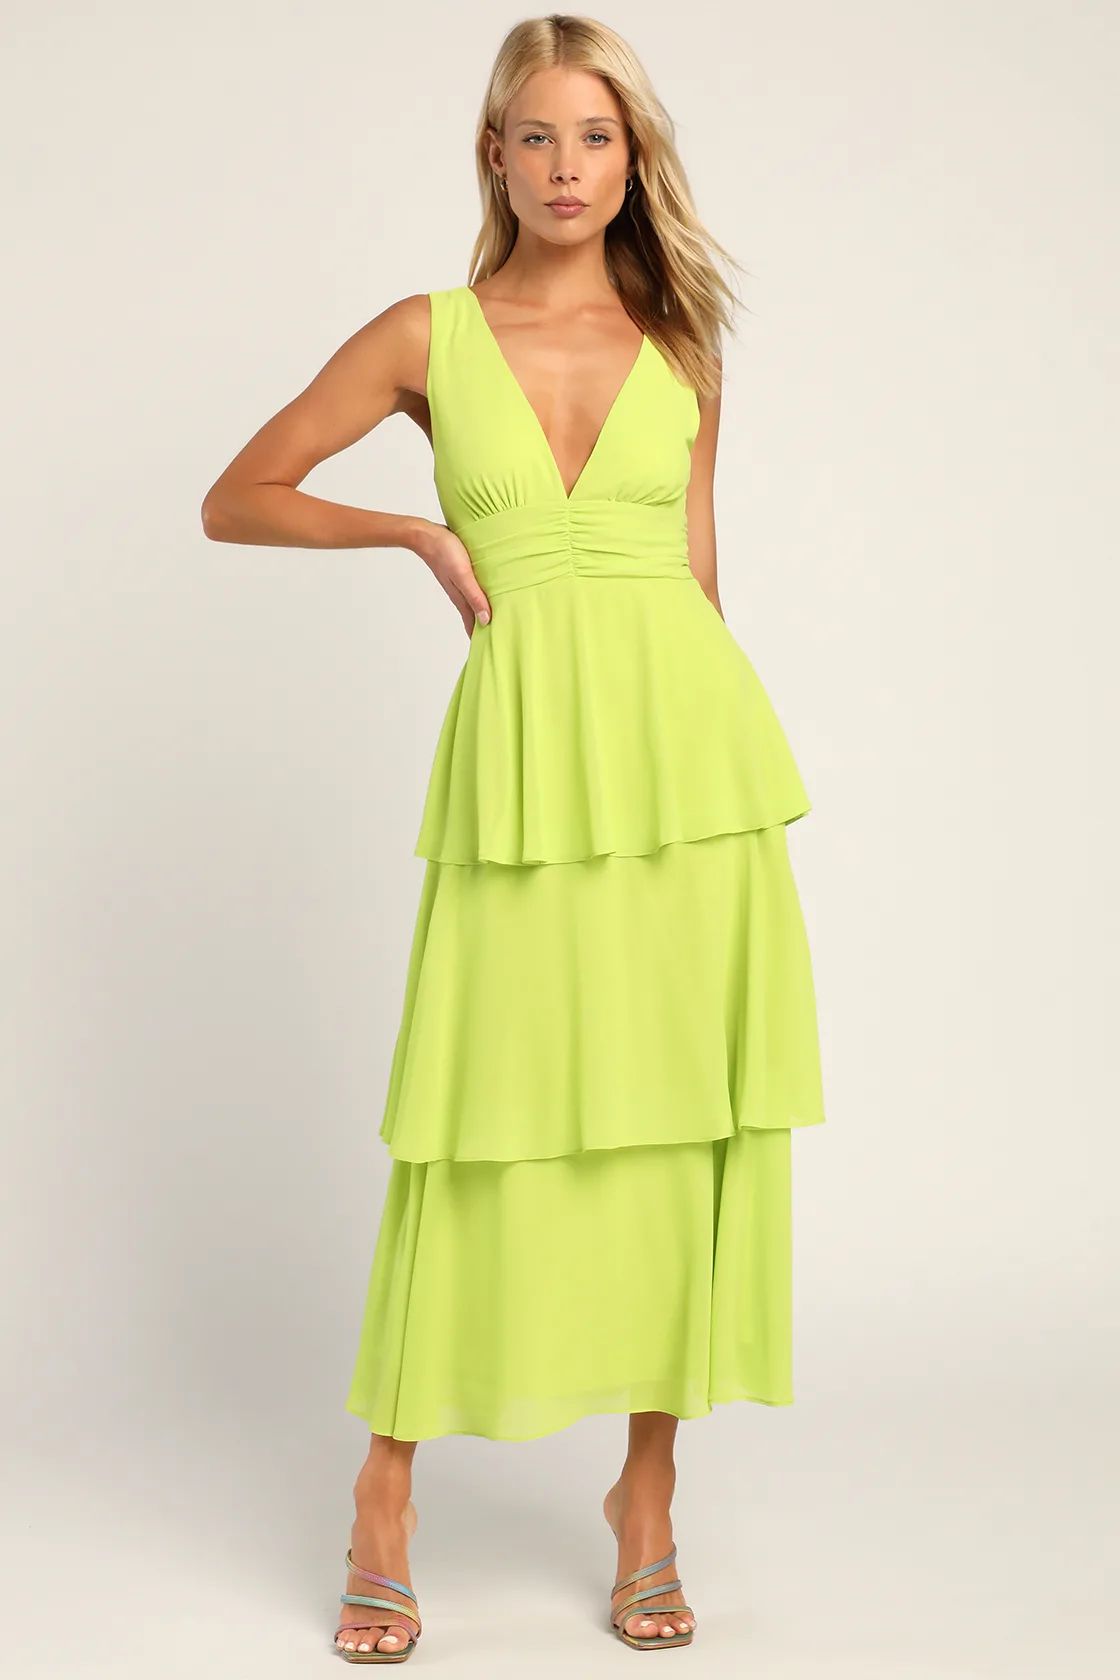 Celebration Time Lime Green Sleeveless Tiered Midi Dress | Lulus